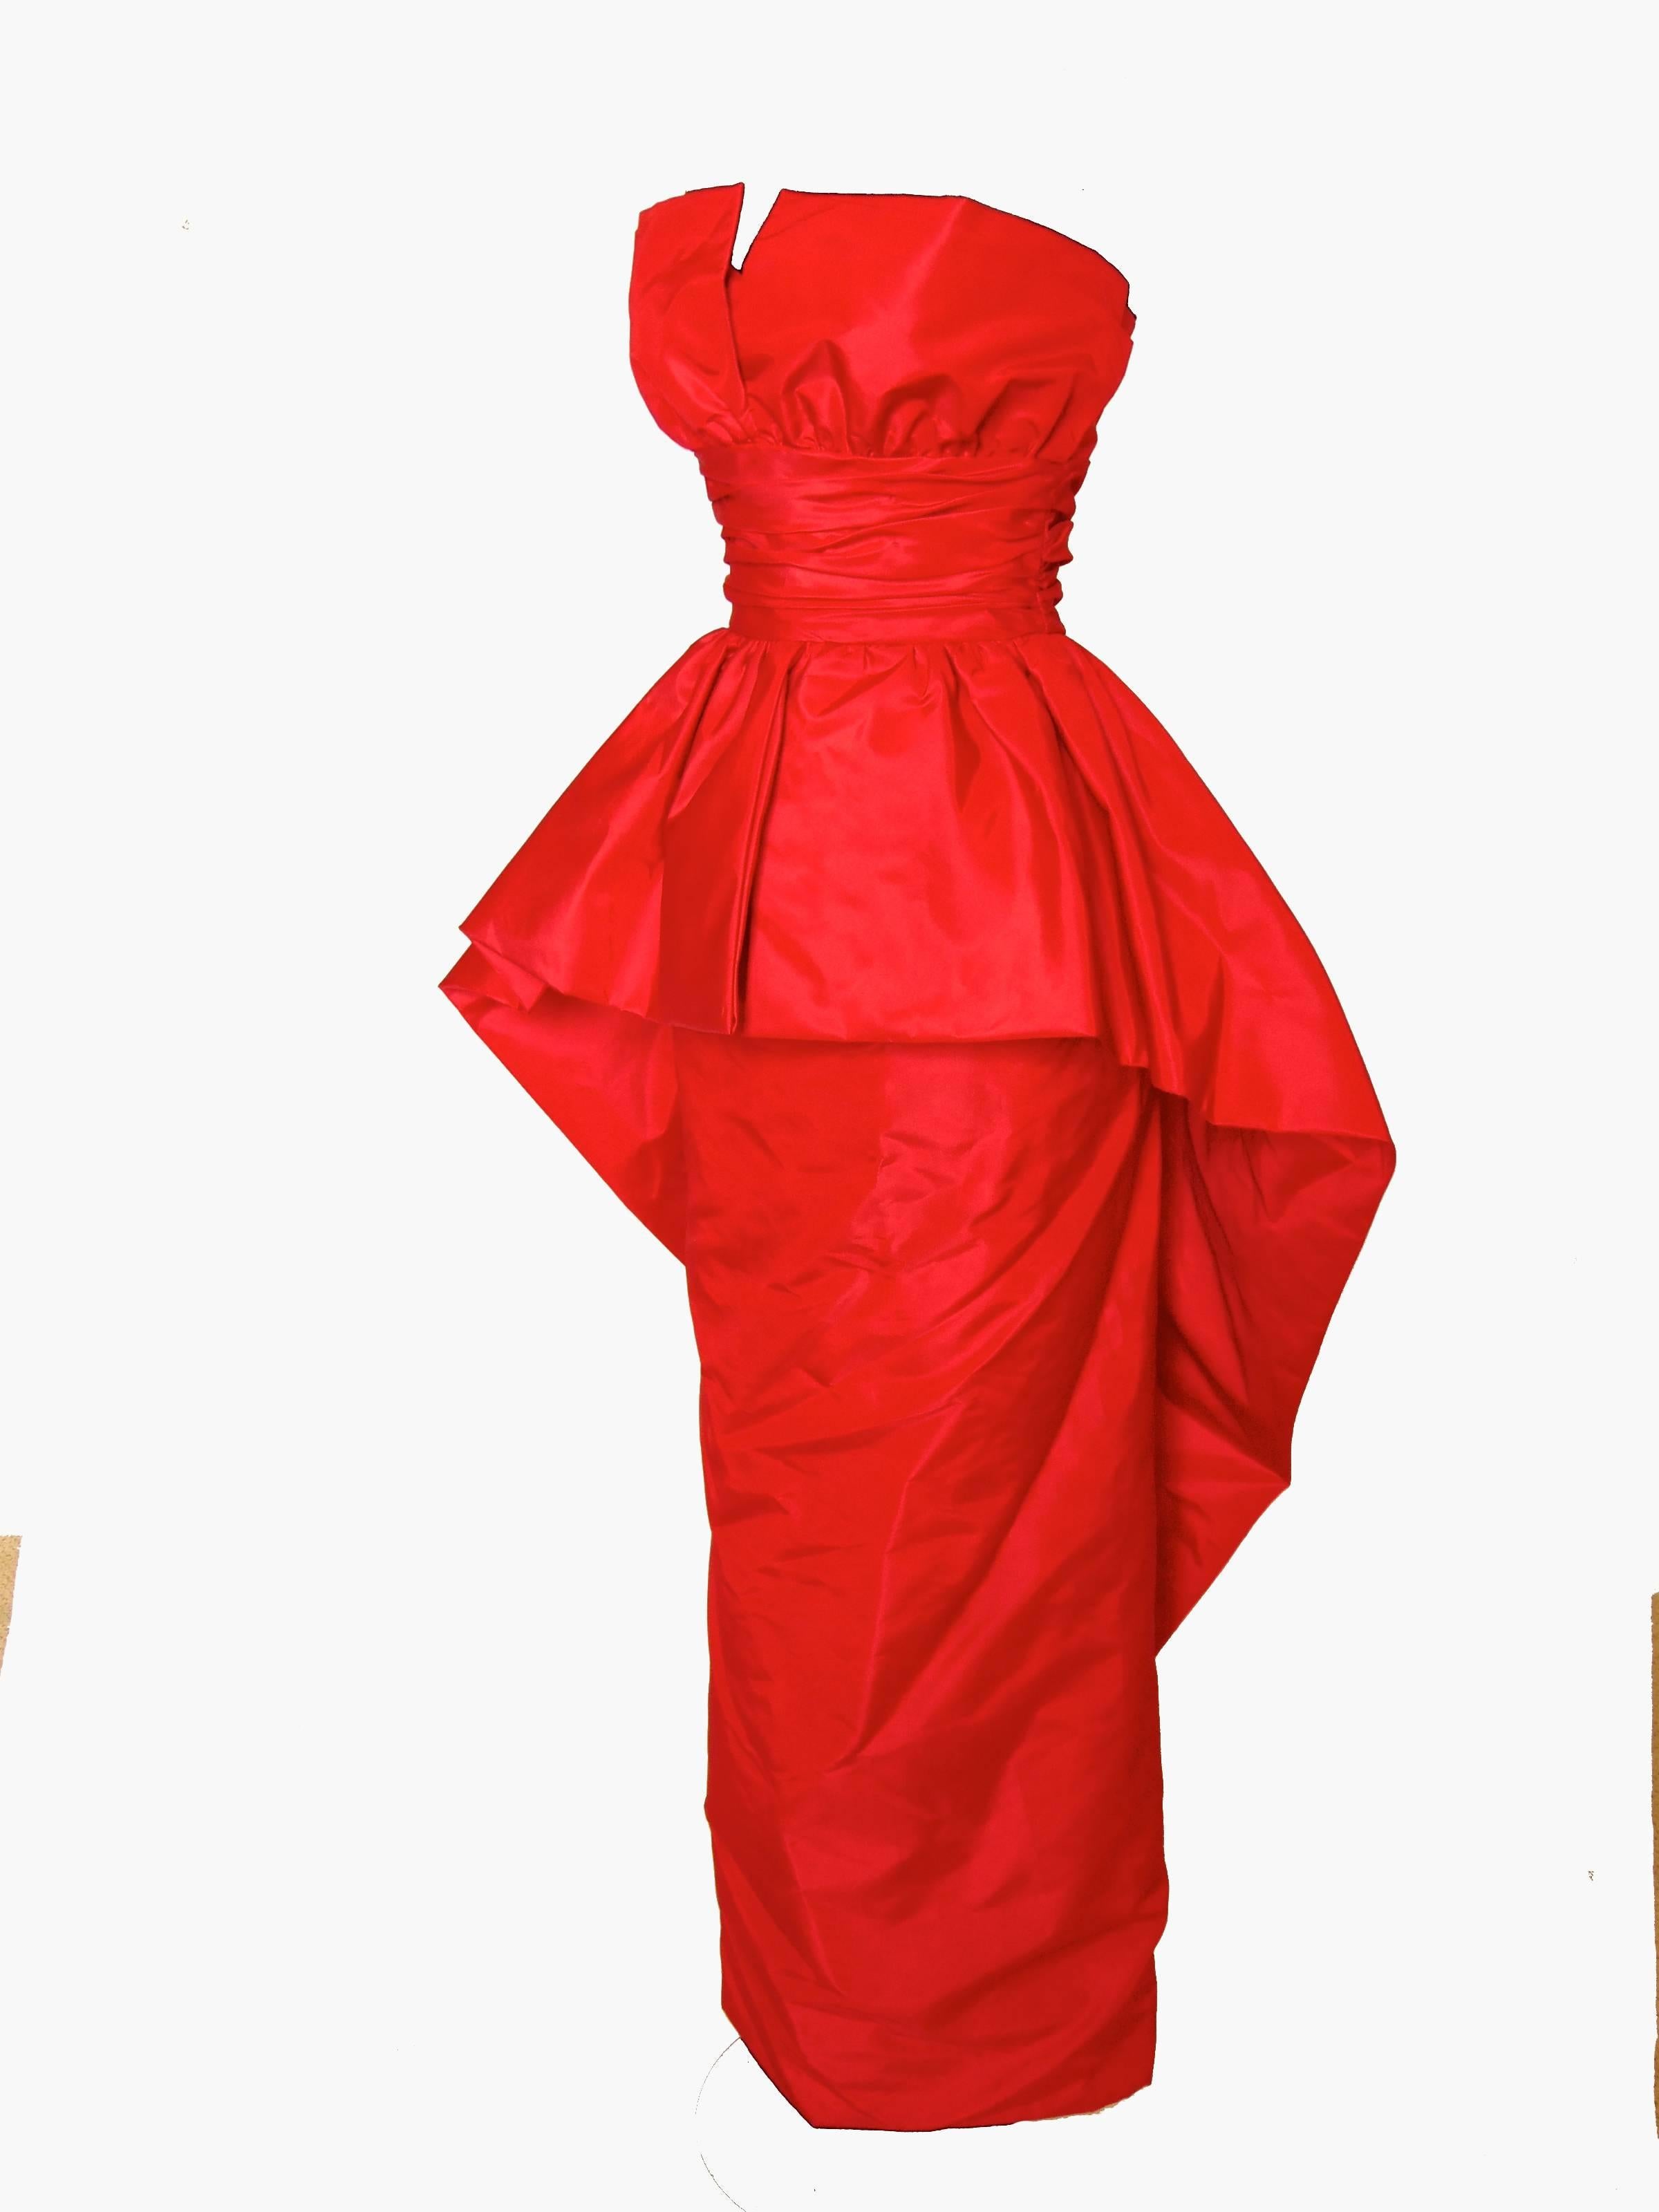 Women's Victor Costa Bright Red Taffeta Evening Gown Strapless Sheath 1970s Size XS